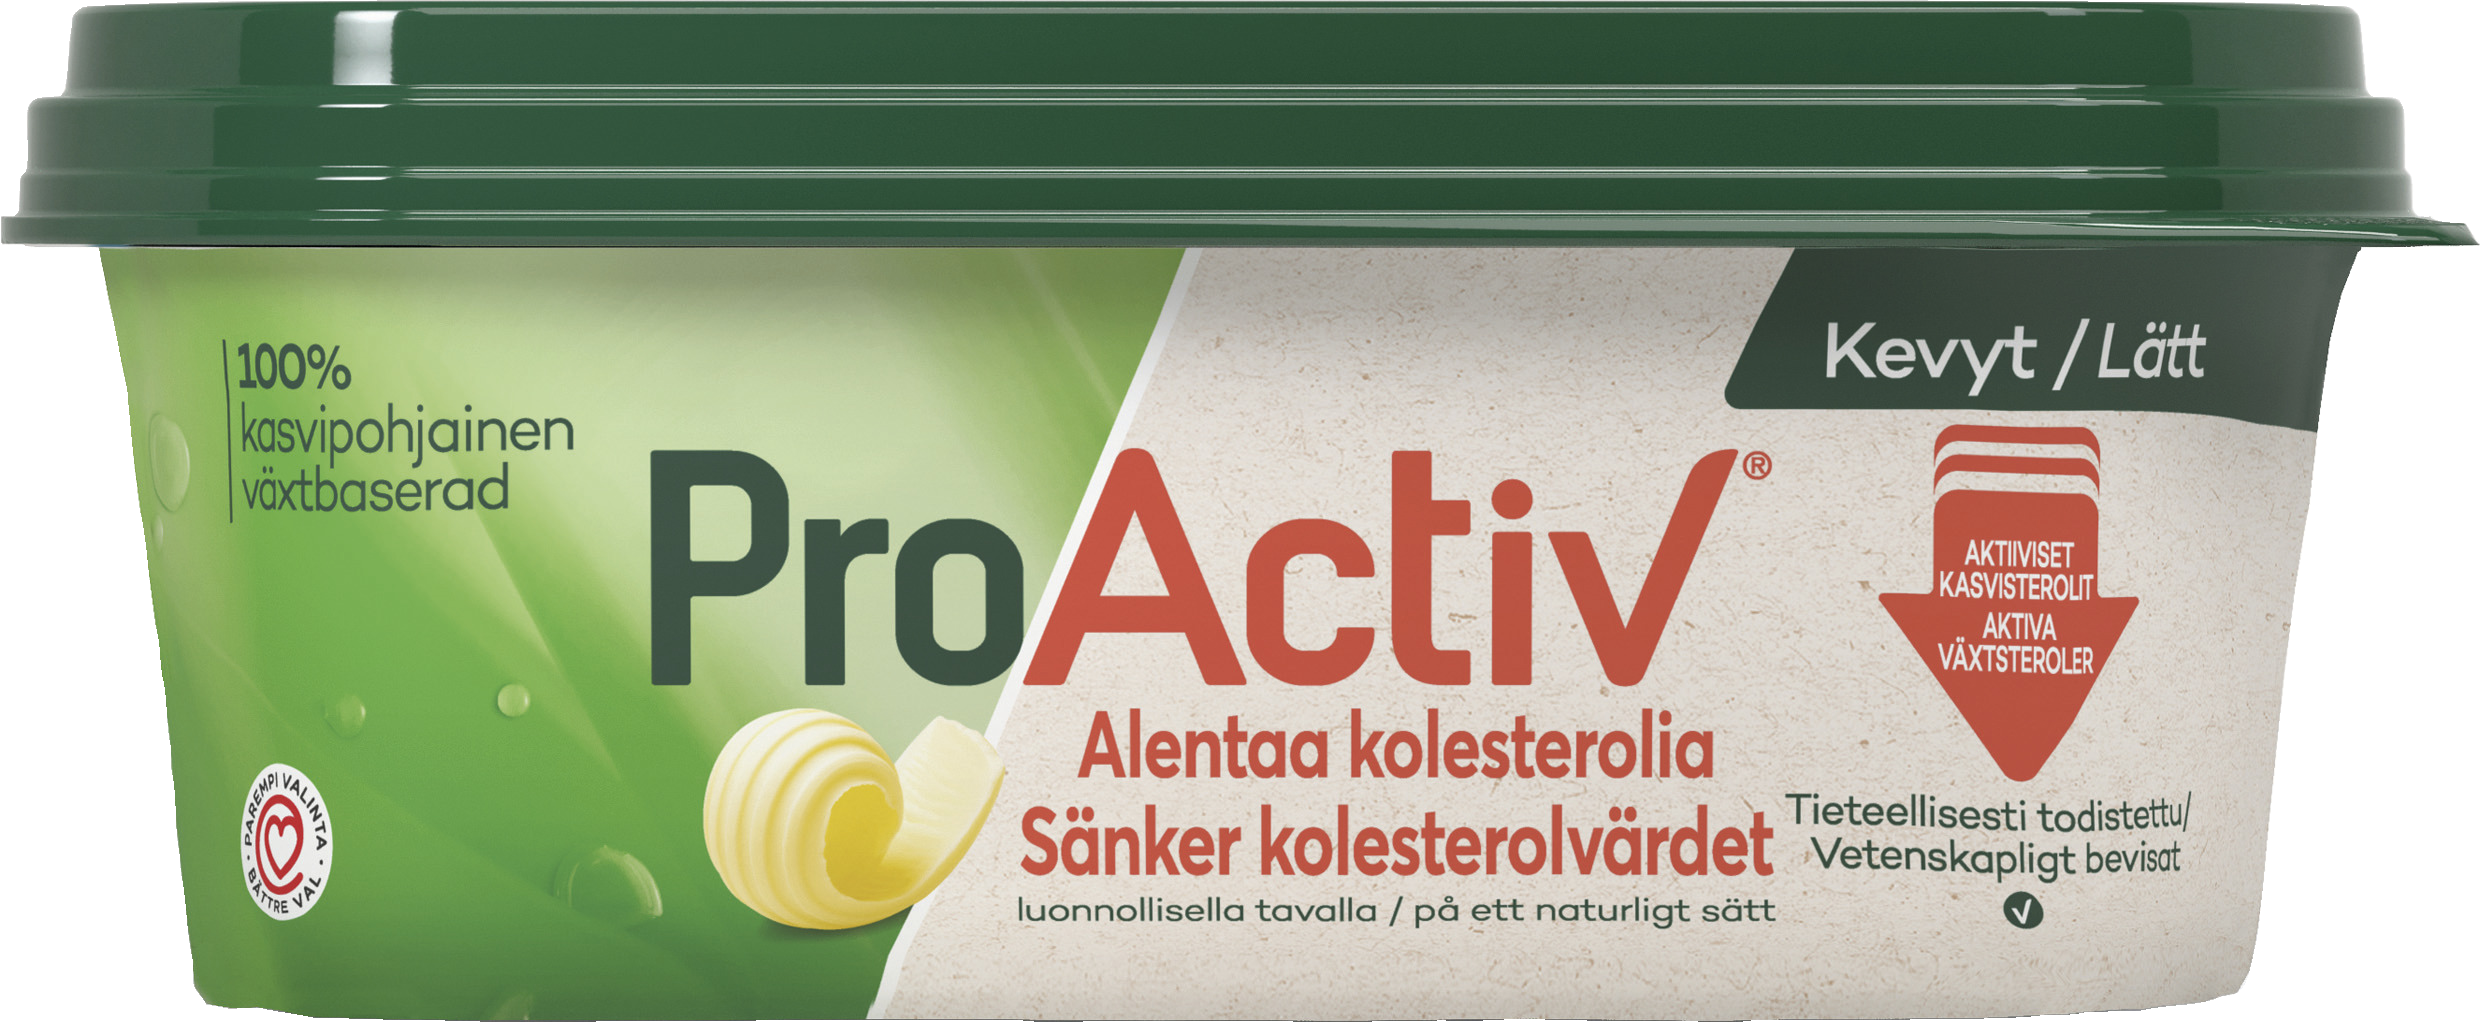 ProActiv 250g 35% levite